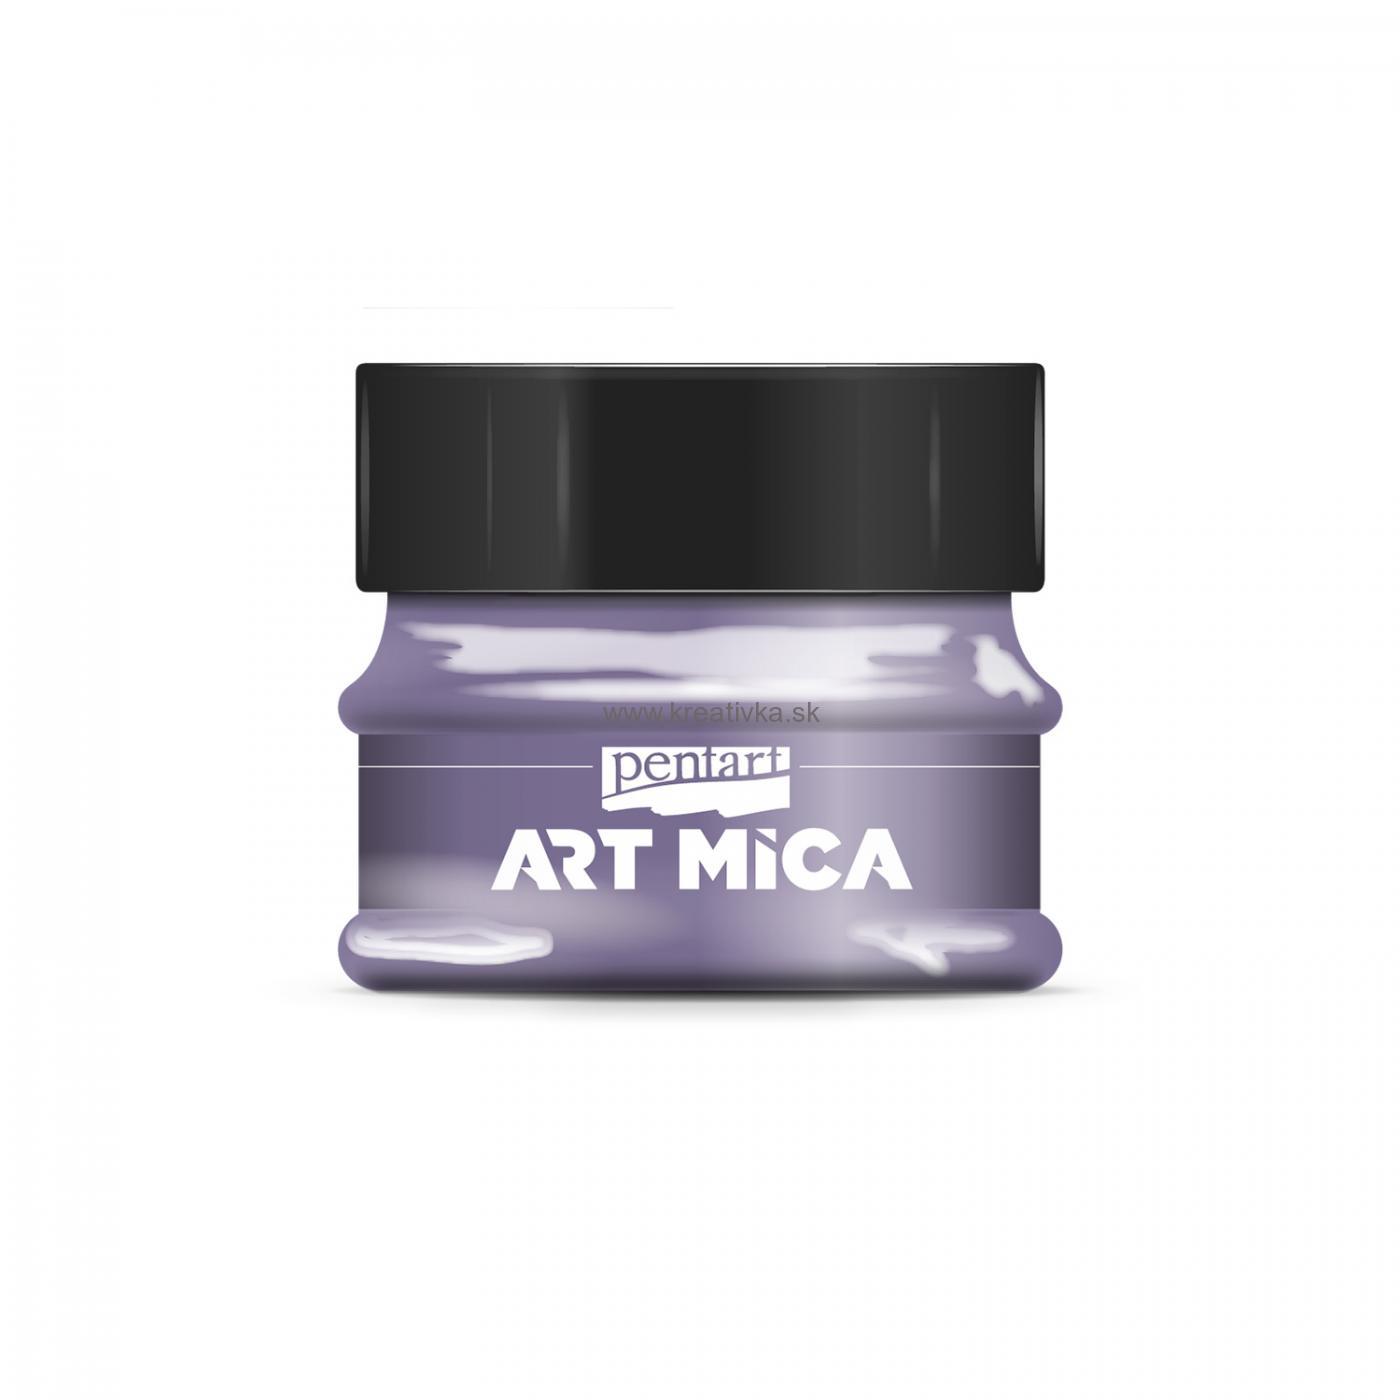 ART MICA minerálny práškový pigment, 9g, magická fialová